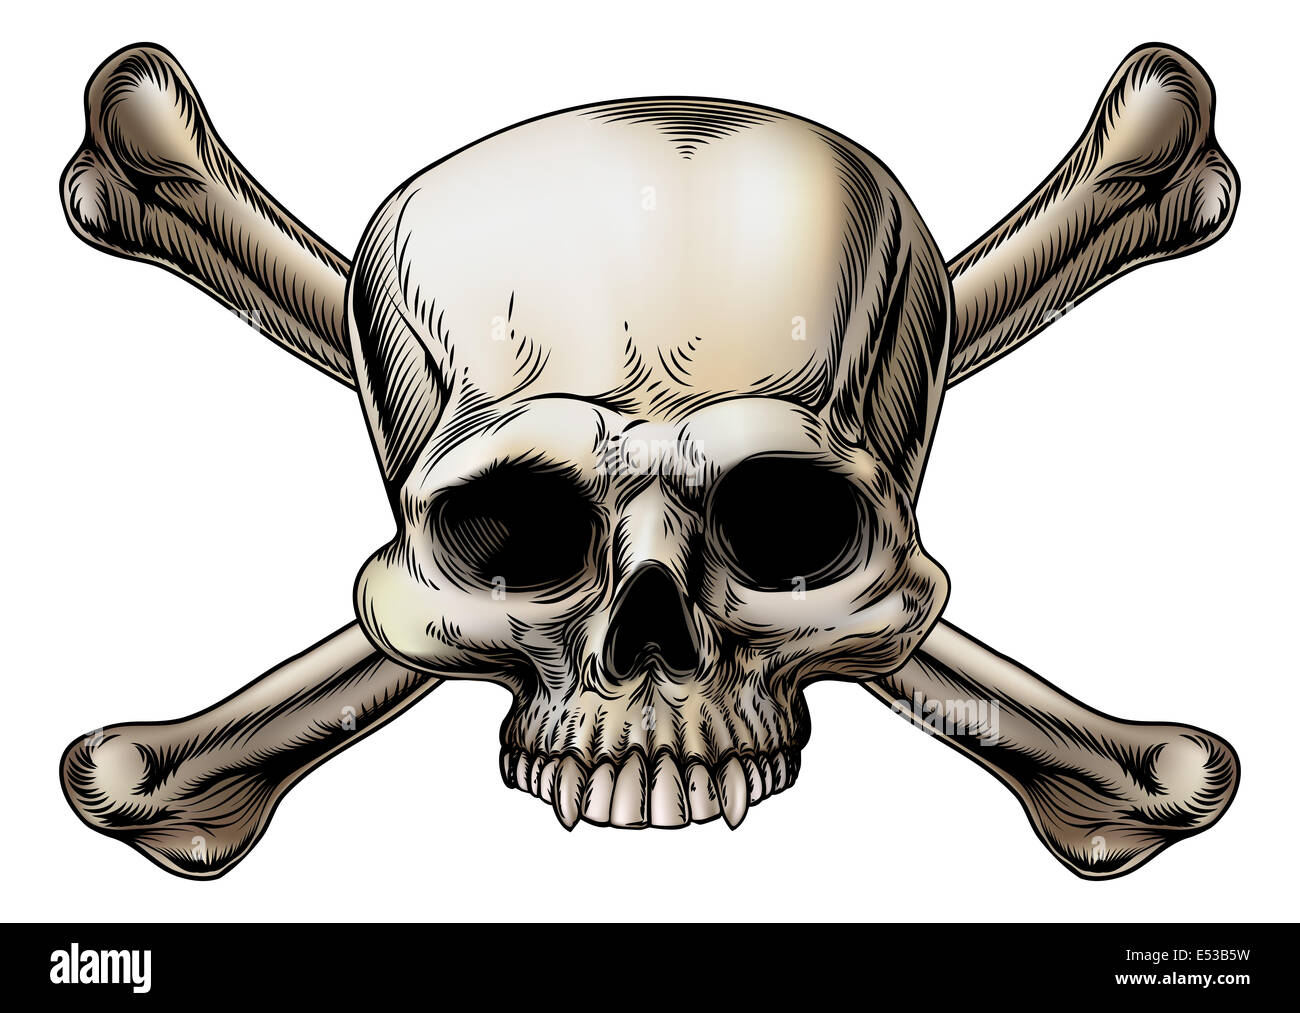 Skeleton design | Cool skull drawings, Skulls drawing, Easy skull drawings